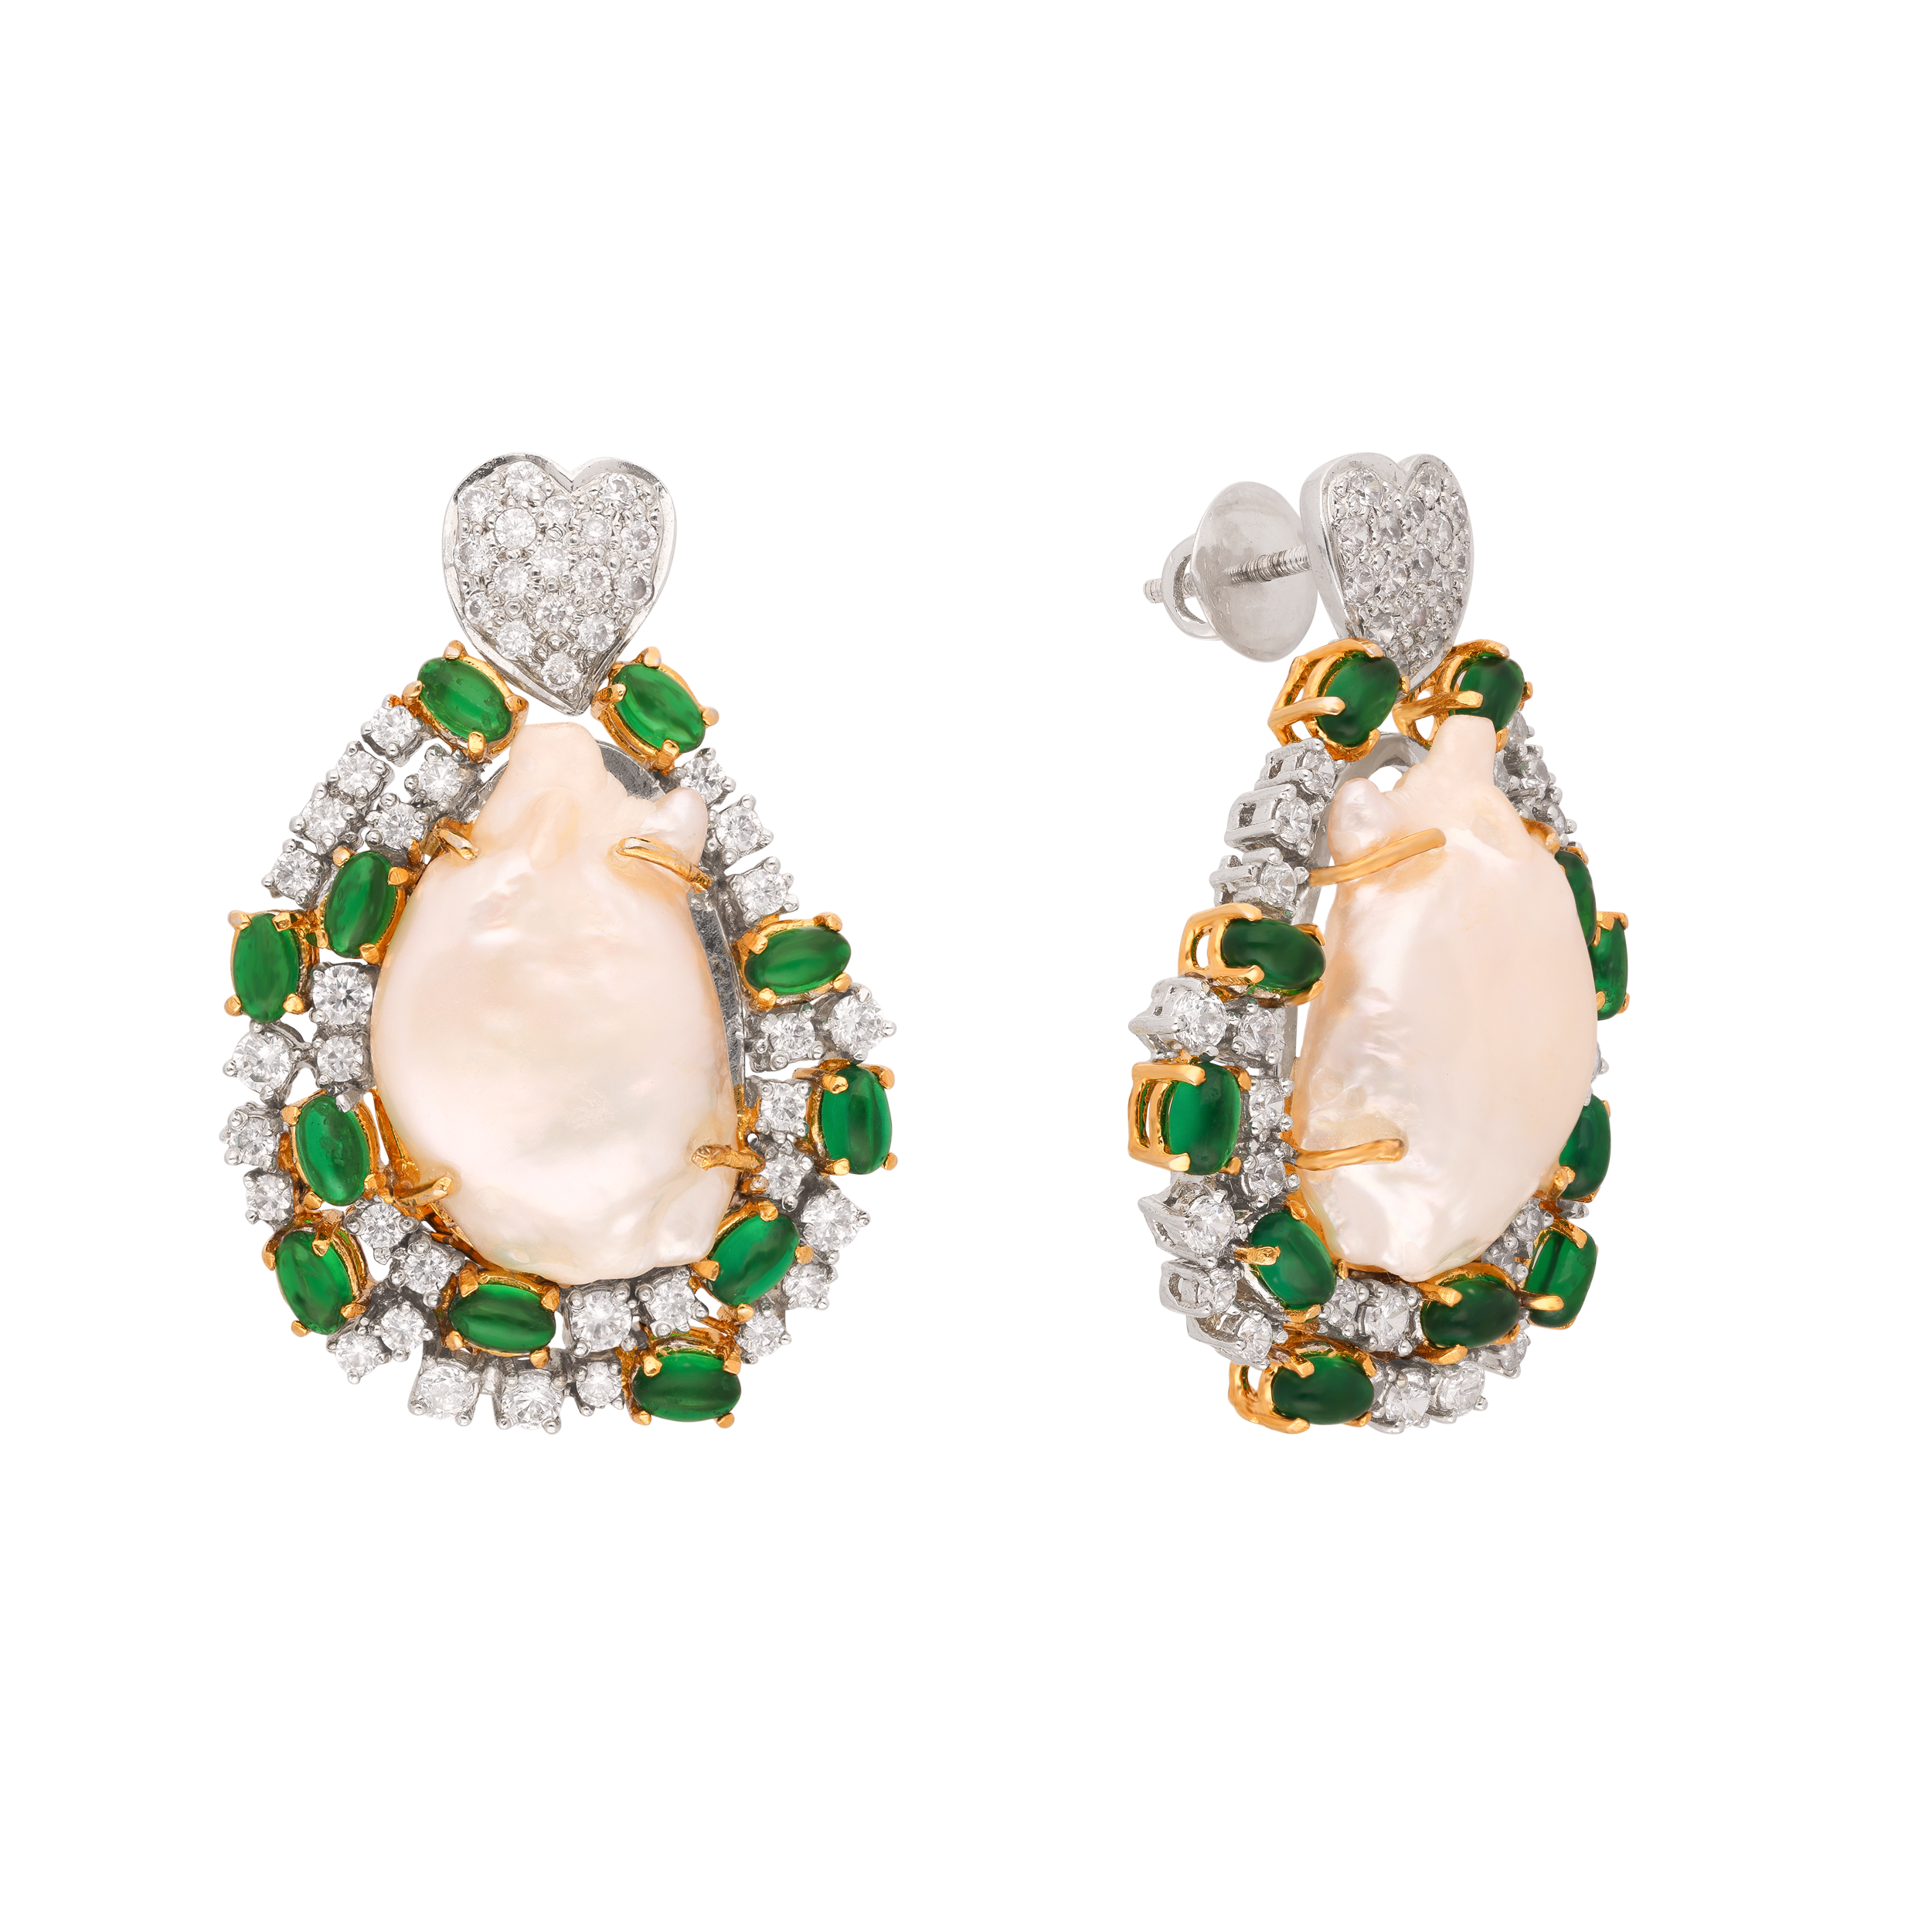 Luxury Designer Silver Earring Drops with Pearls | SKU: 0018721287